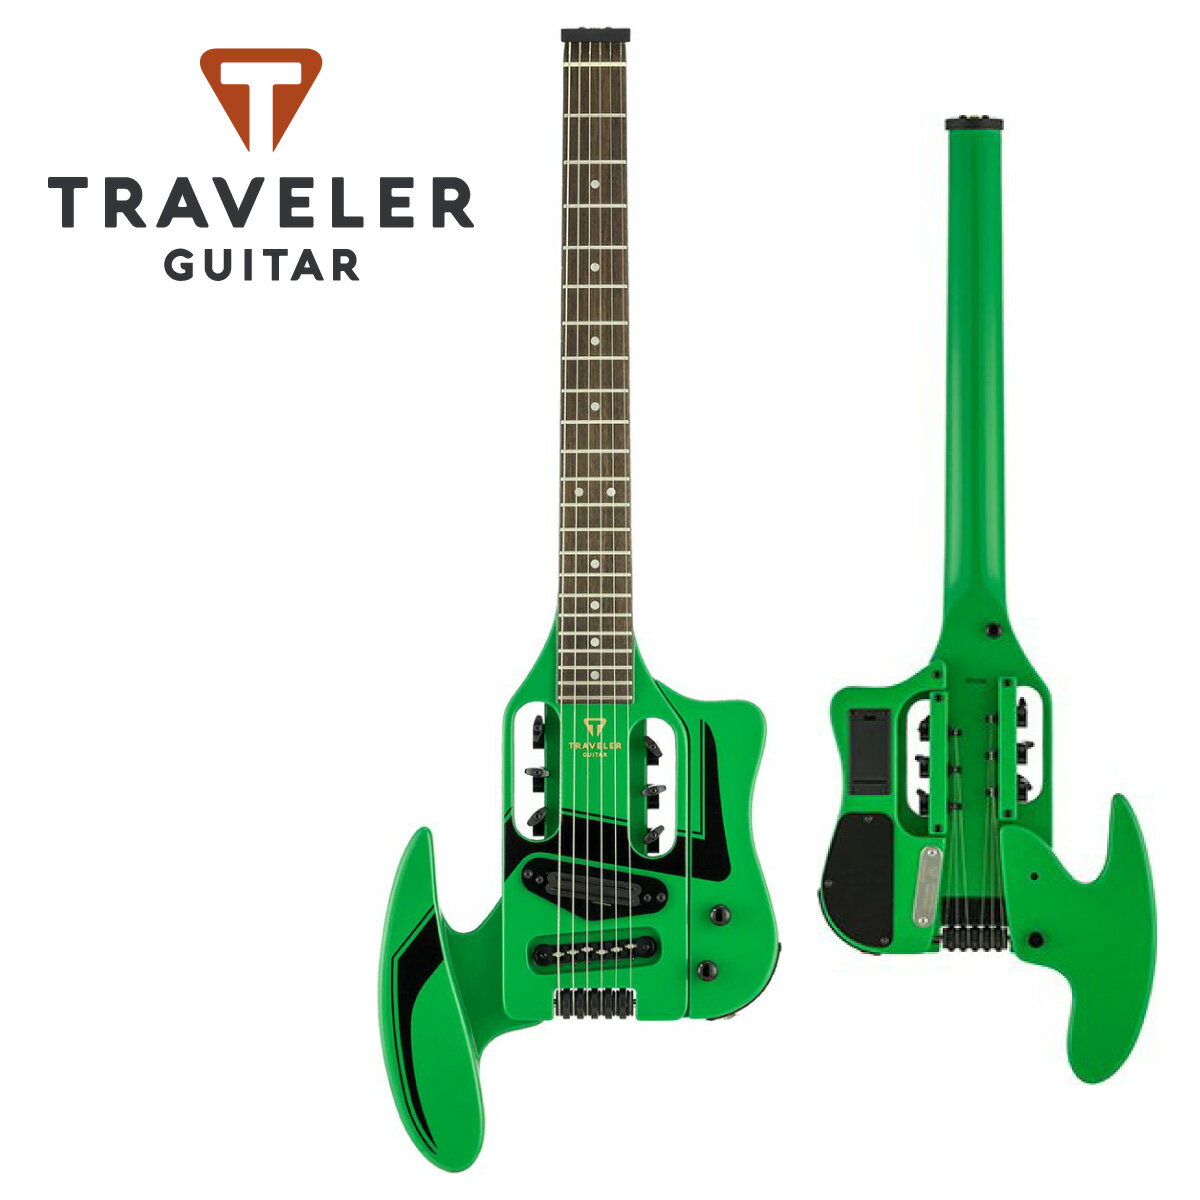 Traveler Guitar Speedster Deluxe -Daytona Green- 新品[トラベラーギター][グリーン,緑][Mini Guitar,トラベルギター,ミニギター][Guitar,エレキギター]